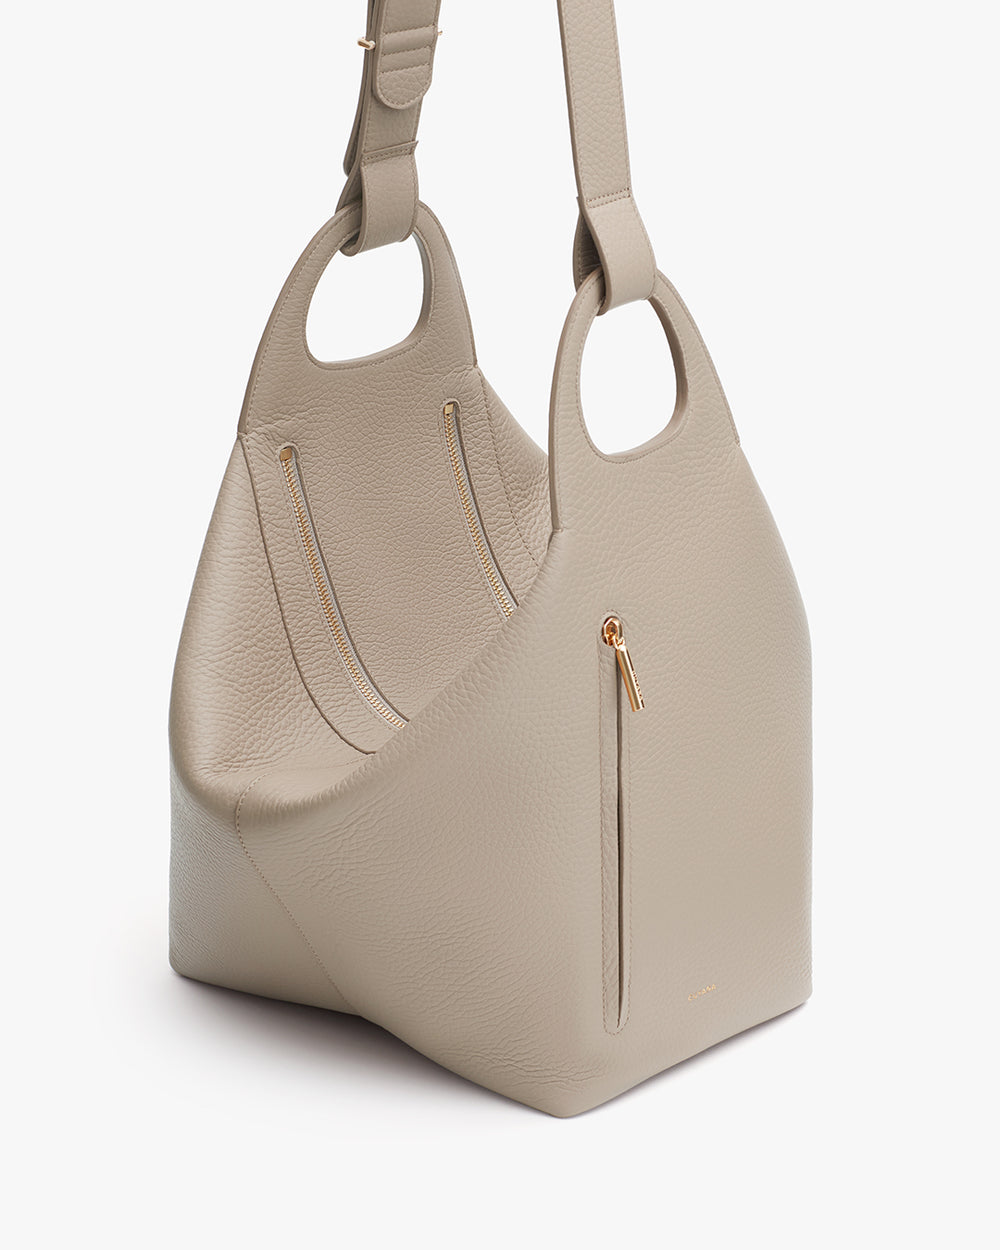 Handbag with front zipper and shoulder strap.